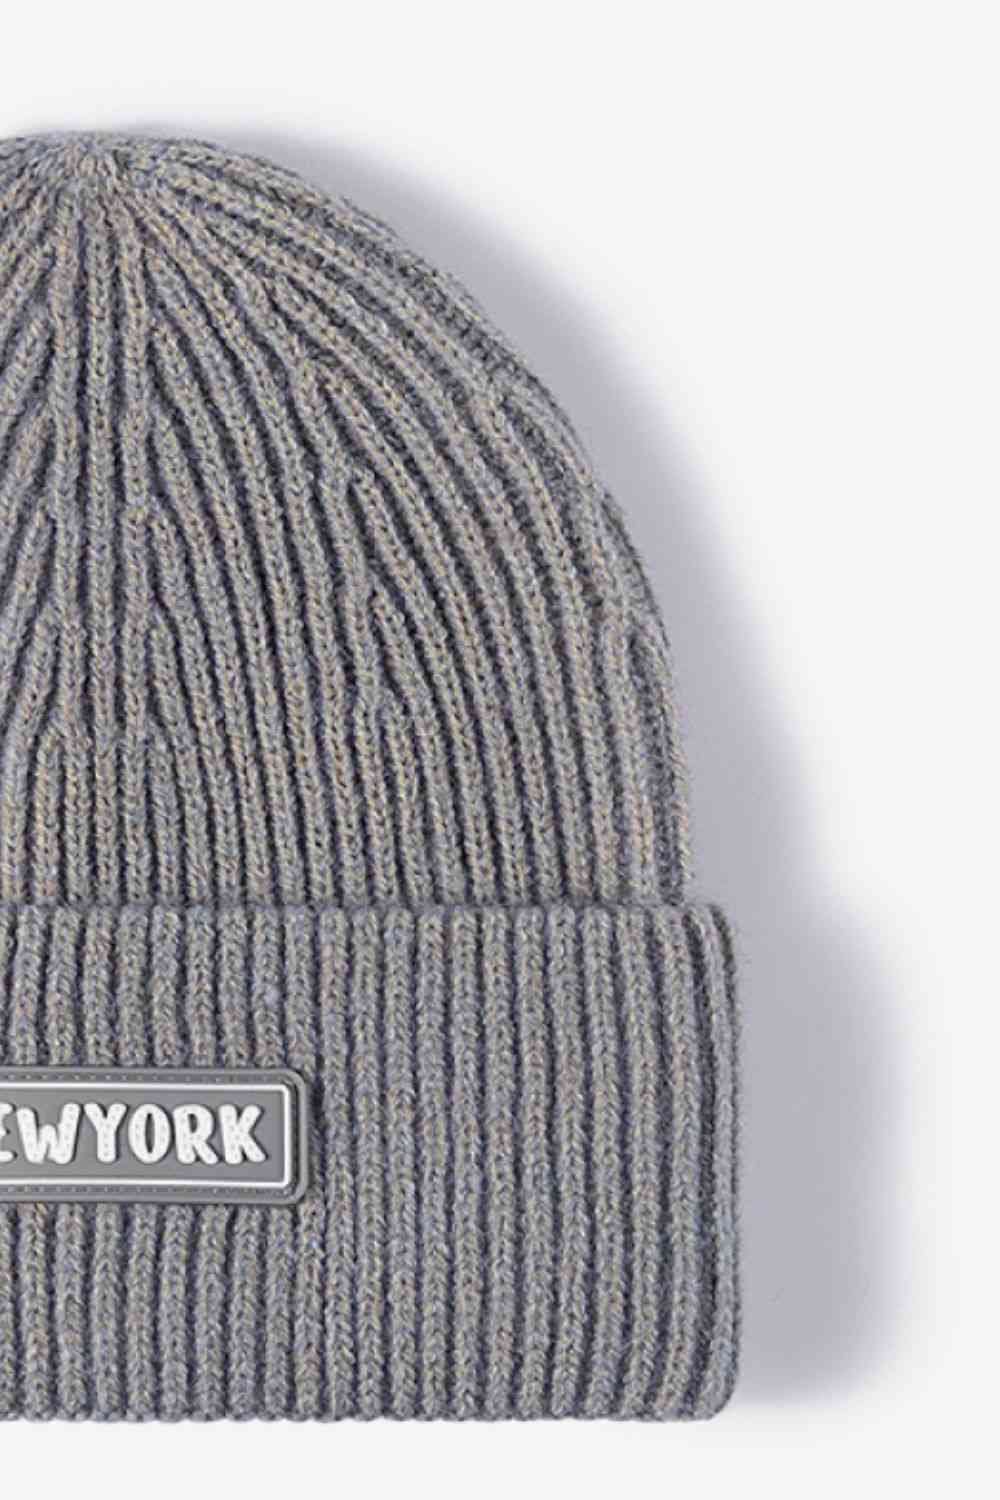 Gray NEWYORK Patch Rib-Knit Cuffed Beanie Winter Accessories